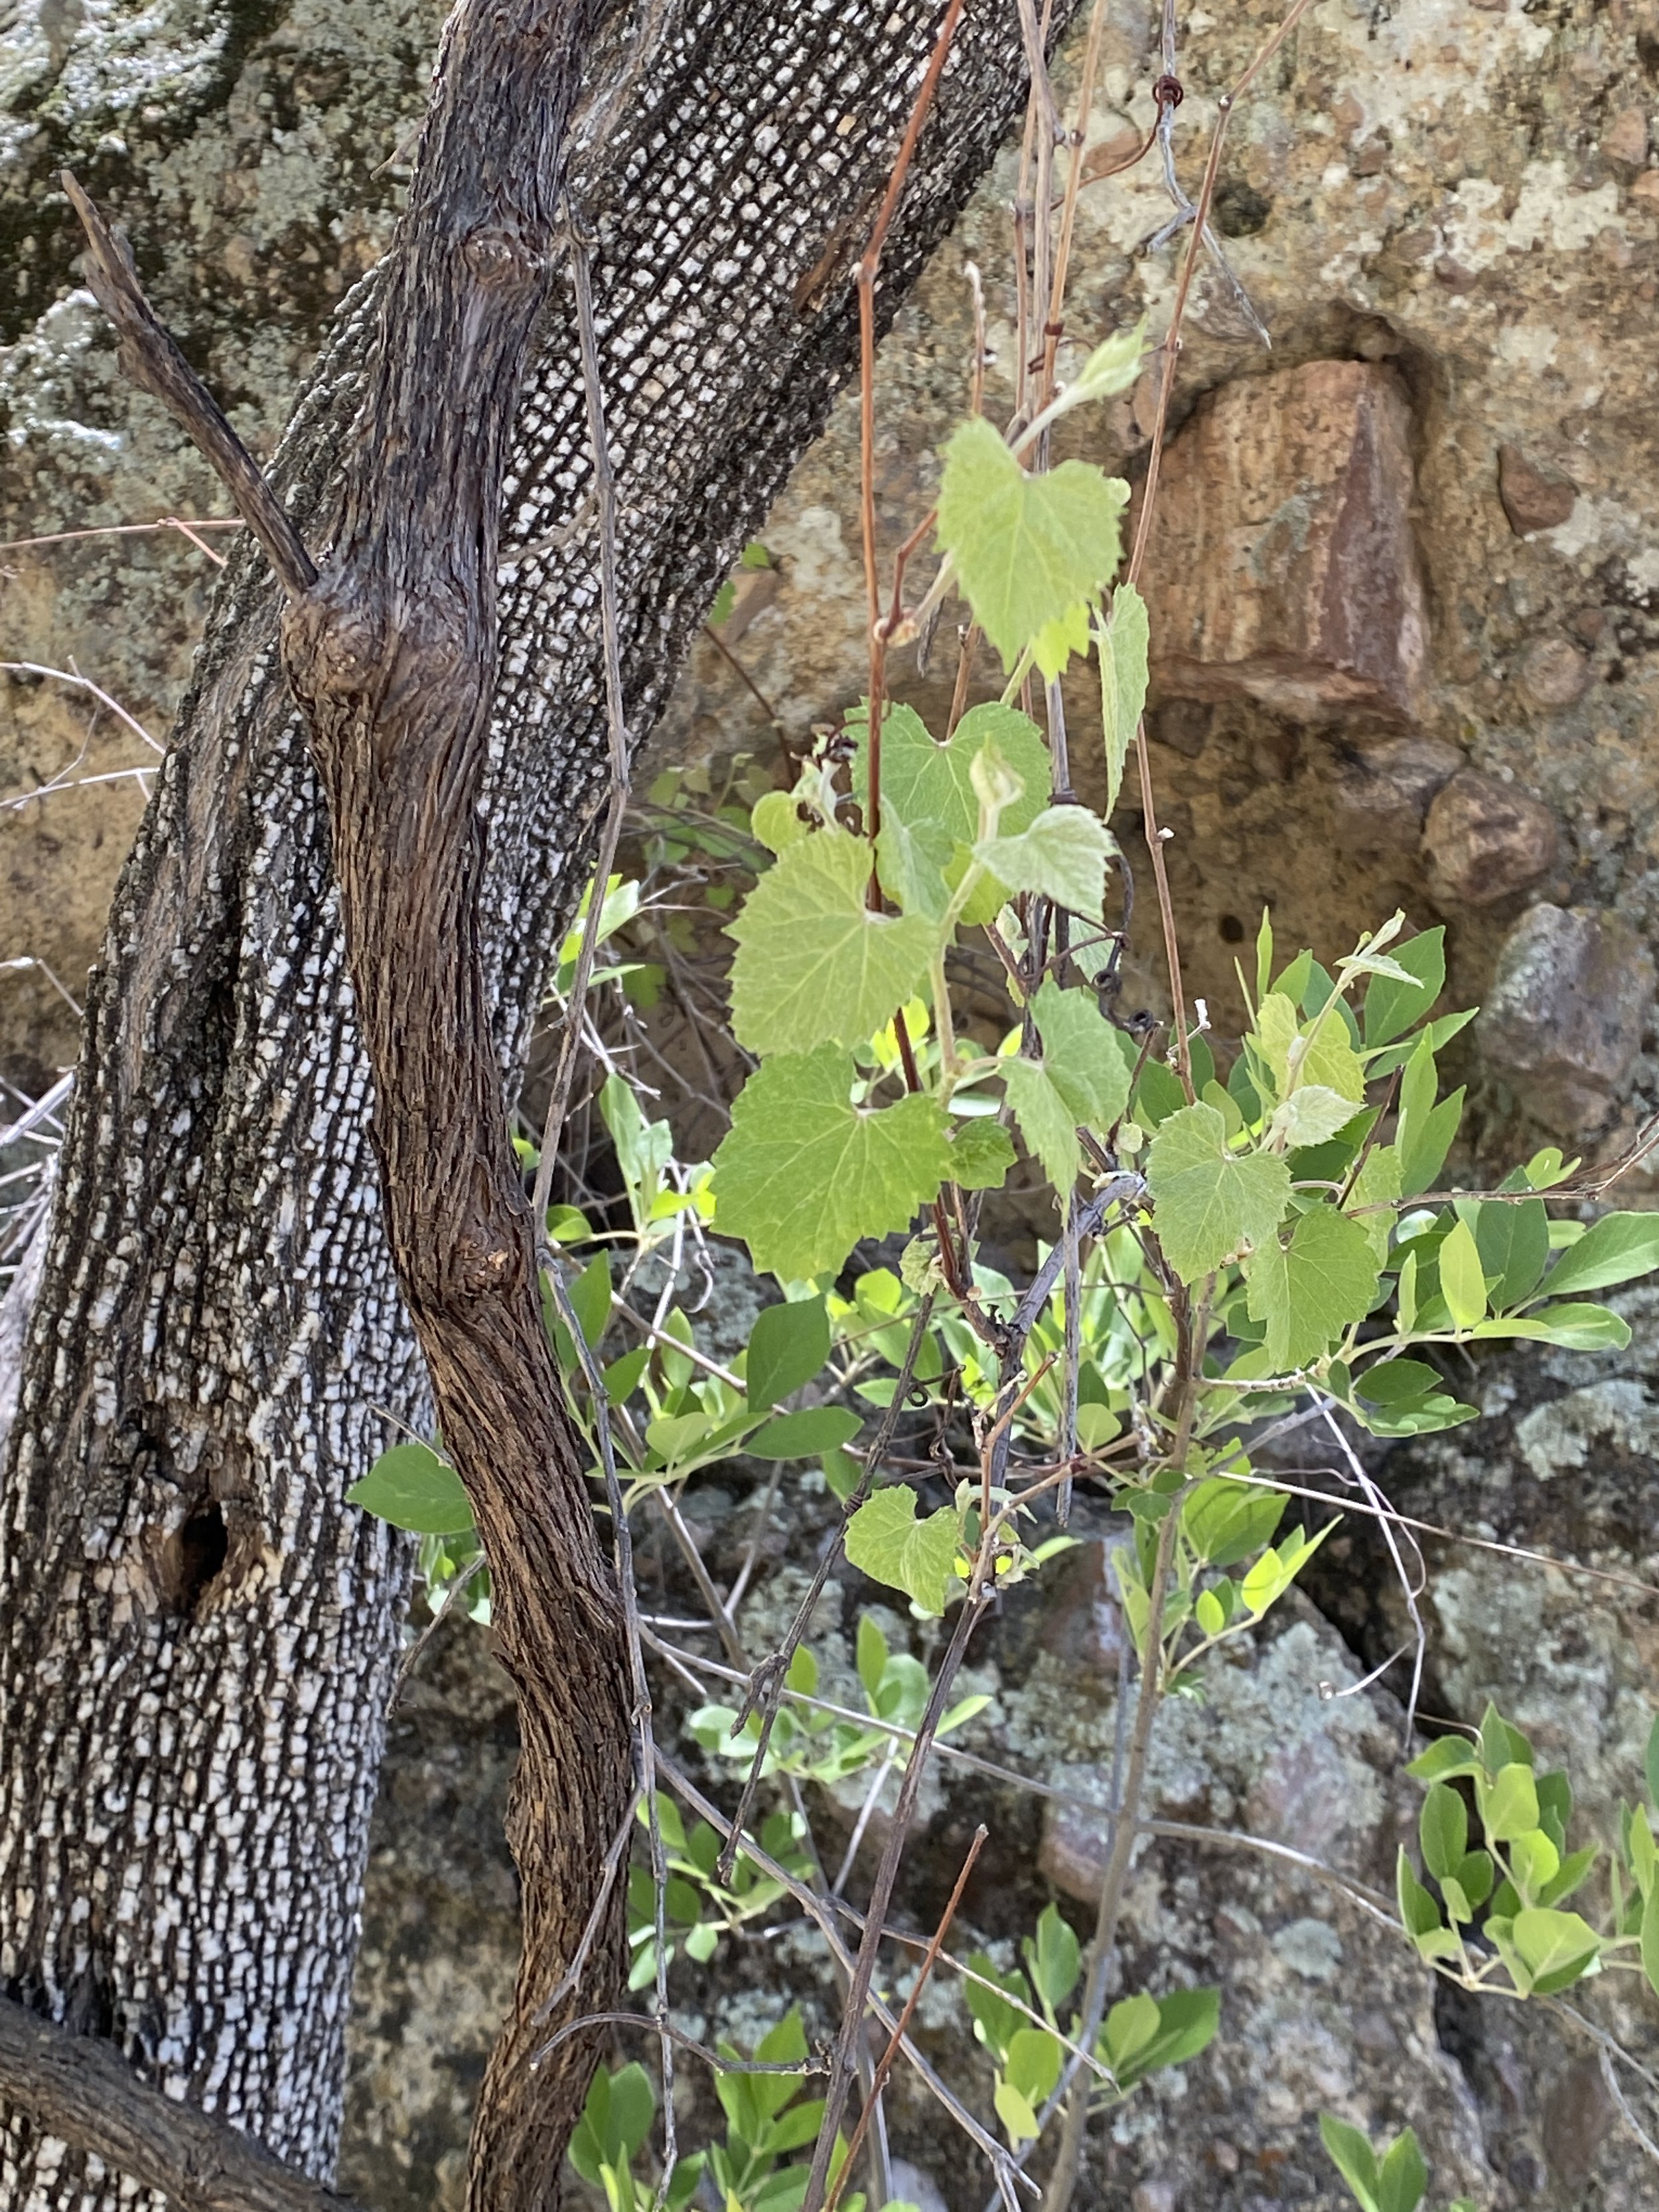 Native canyon grape (Vitus arizonica) grows near the shrine.